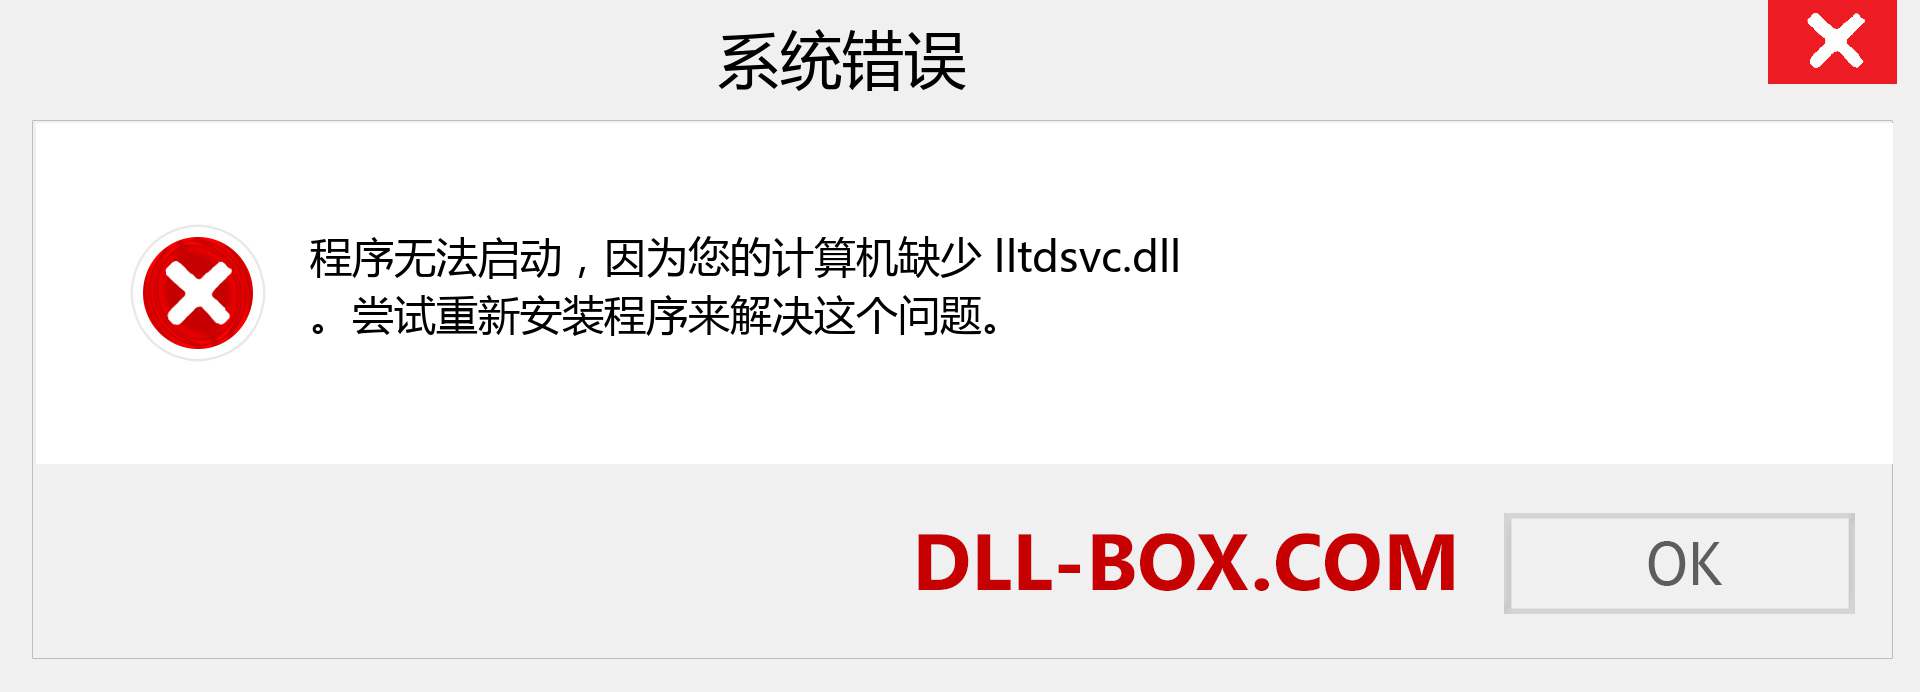 lltdsvc.dll 文件丢失？。 适用于 Windows 7、8、10 的下载 - 修复 Windows、照片、图像上的 lltdsvc dll 丢失错误